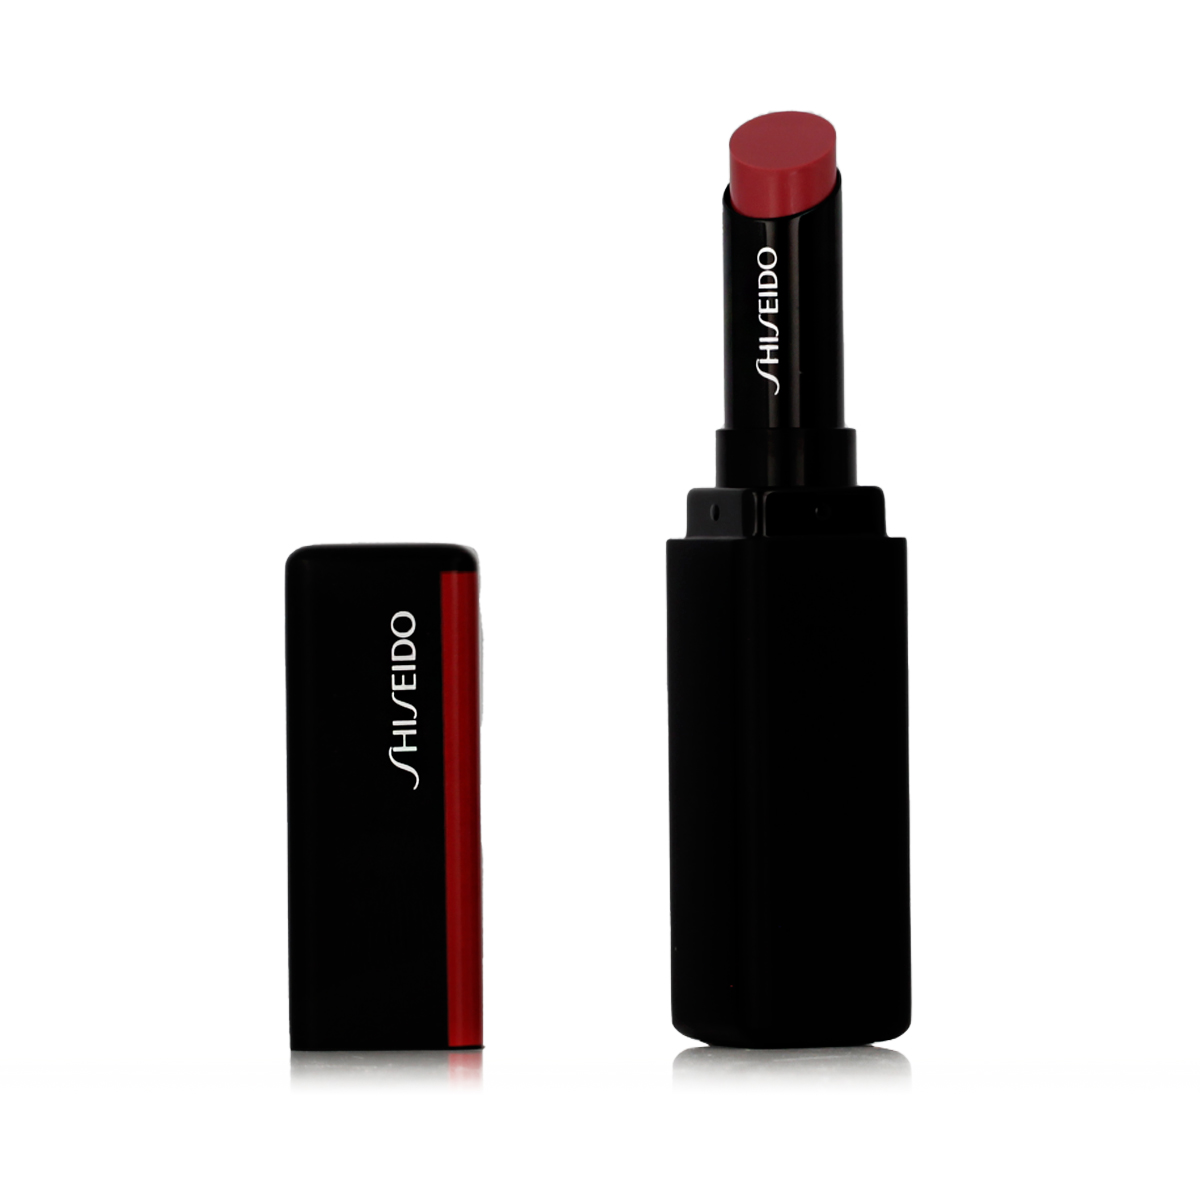 Shiseido ColorGel Lip Balm 2g lūpų blizgesys